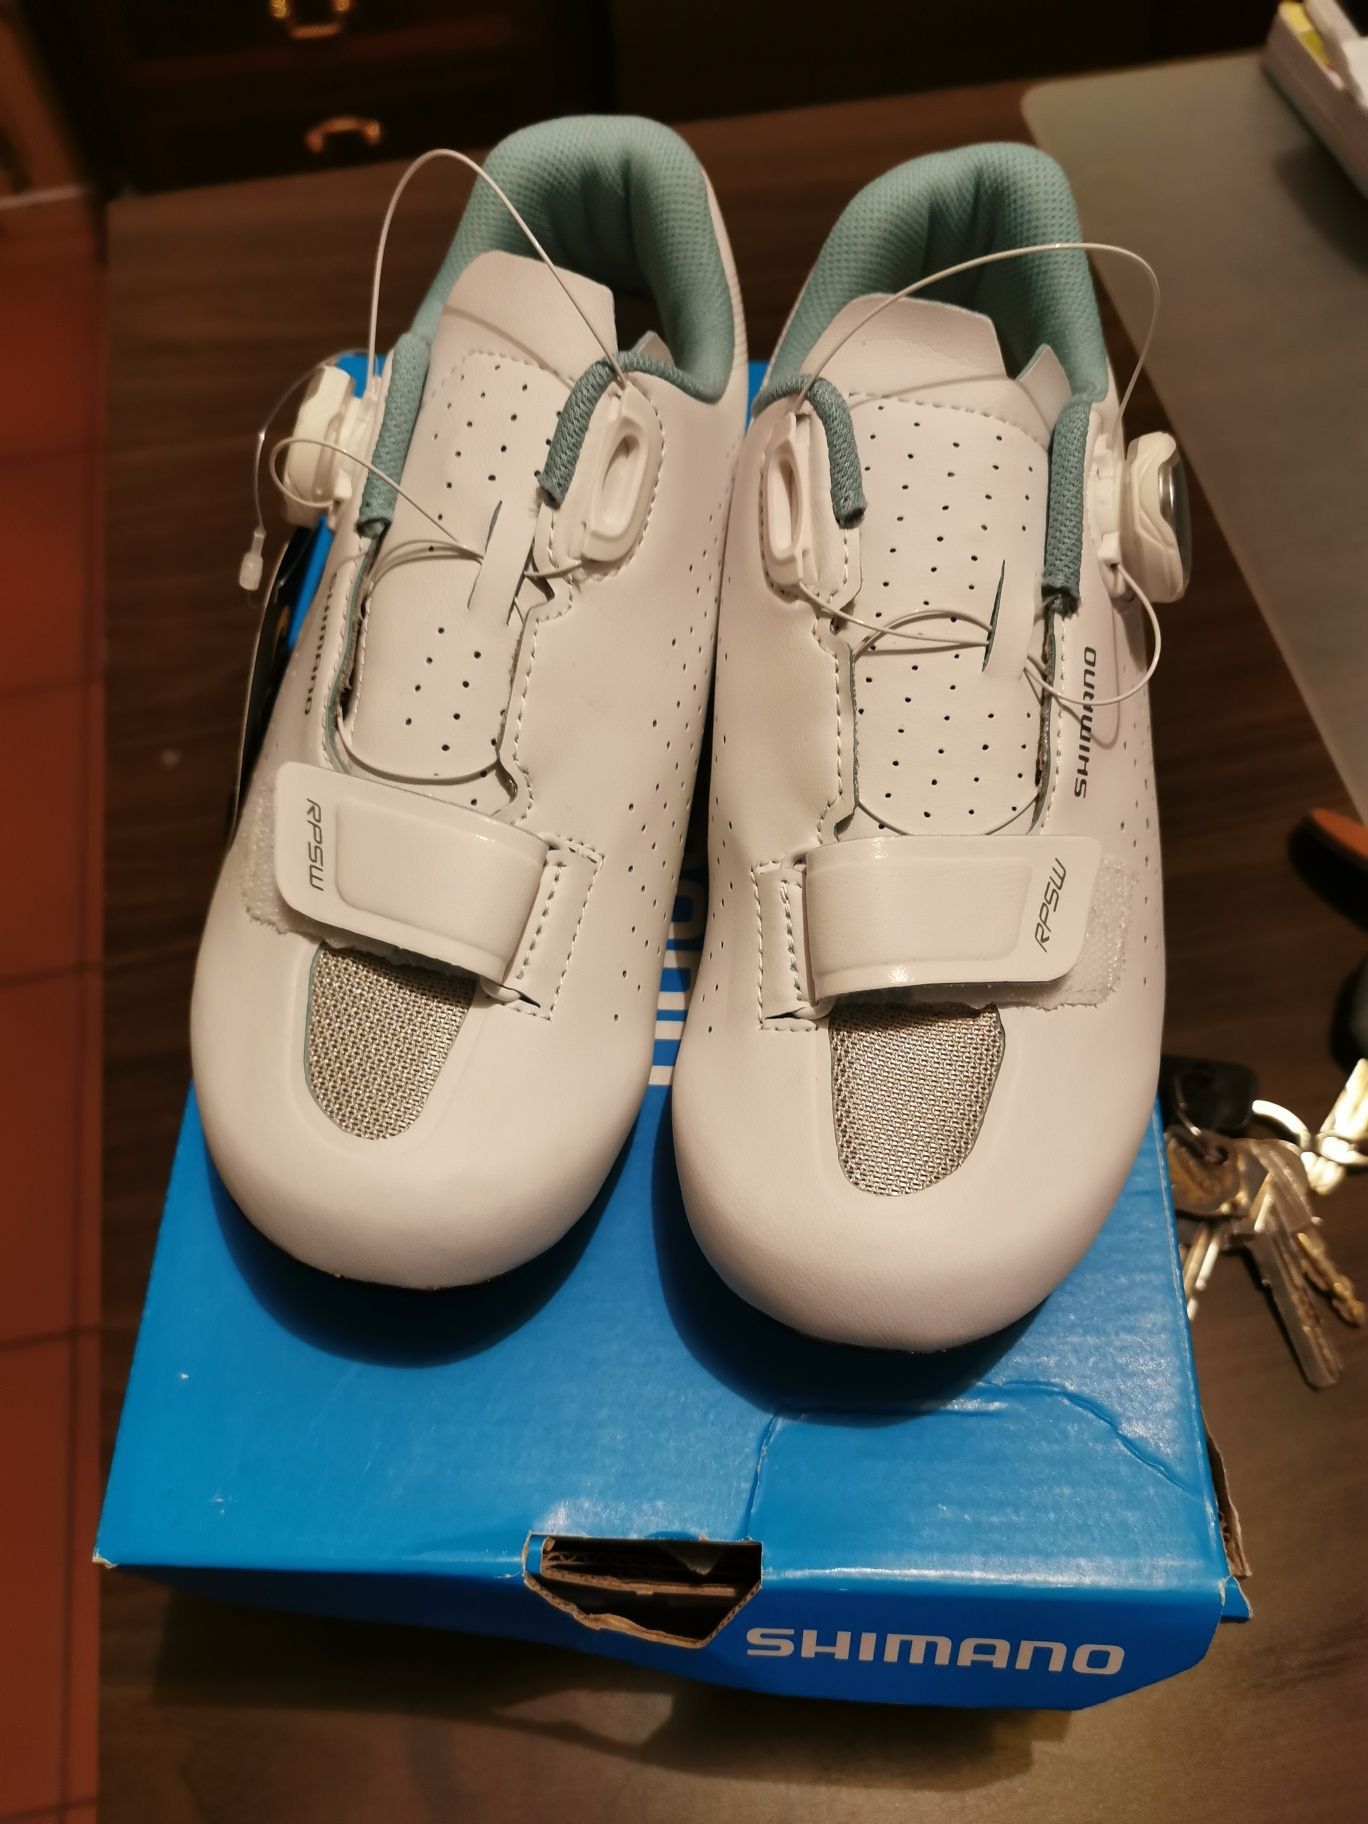 Sapatos shimano lady spd sl RP5 tamanho 37